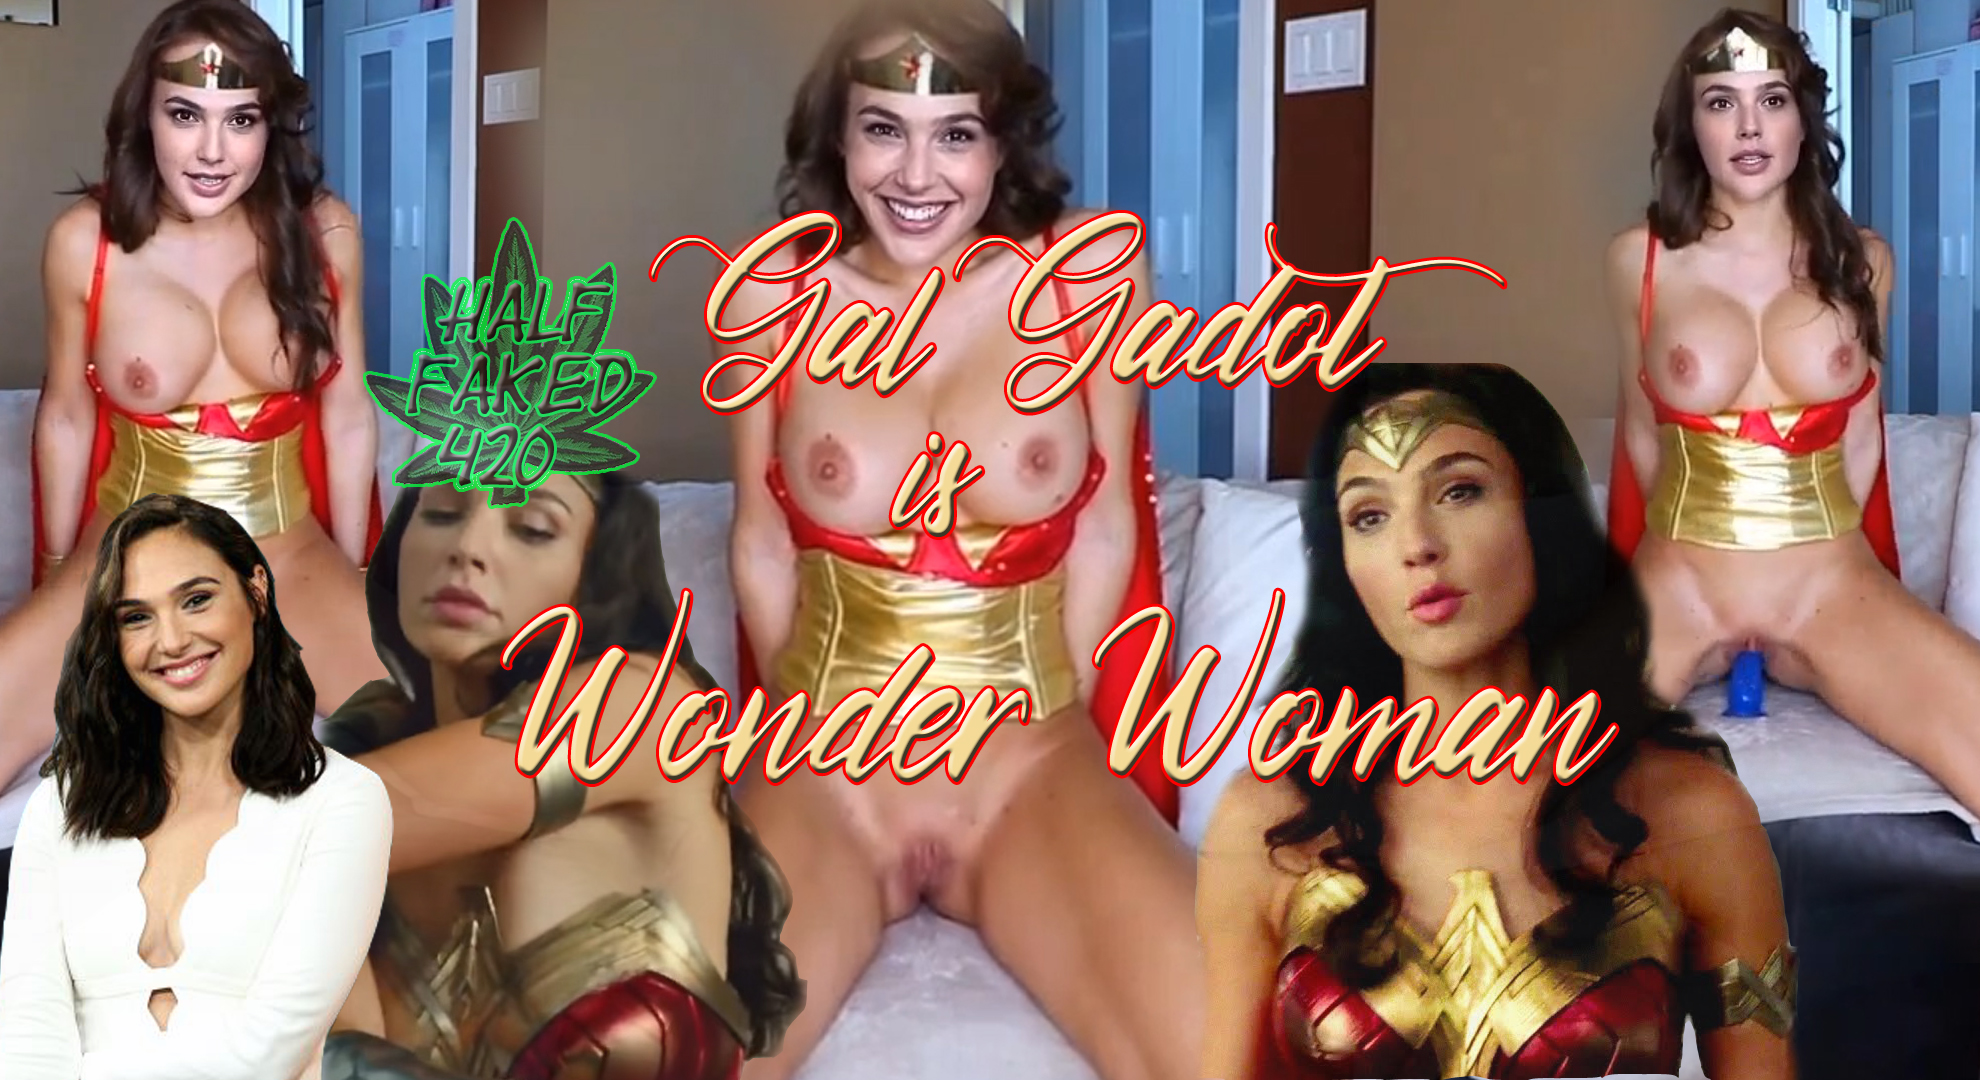 Wonder Woman Dildo